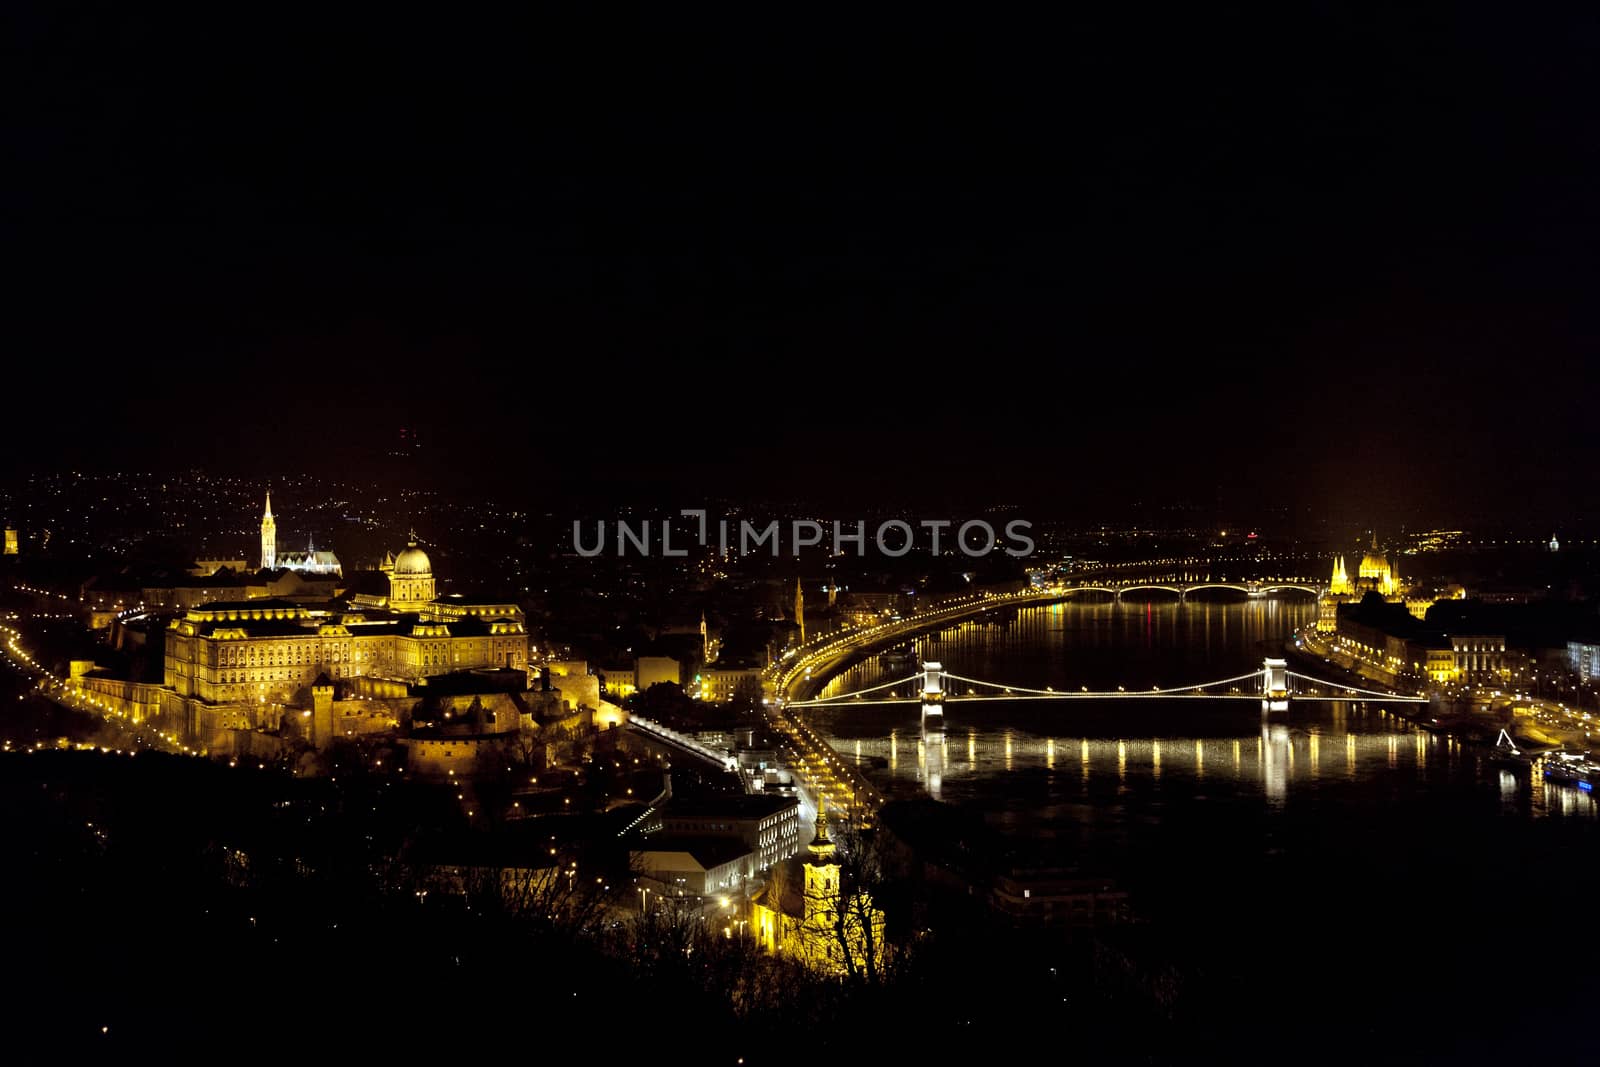 Buda Castle in Budapest, Hungary illuminated at night